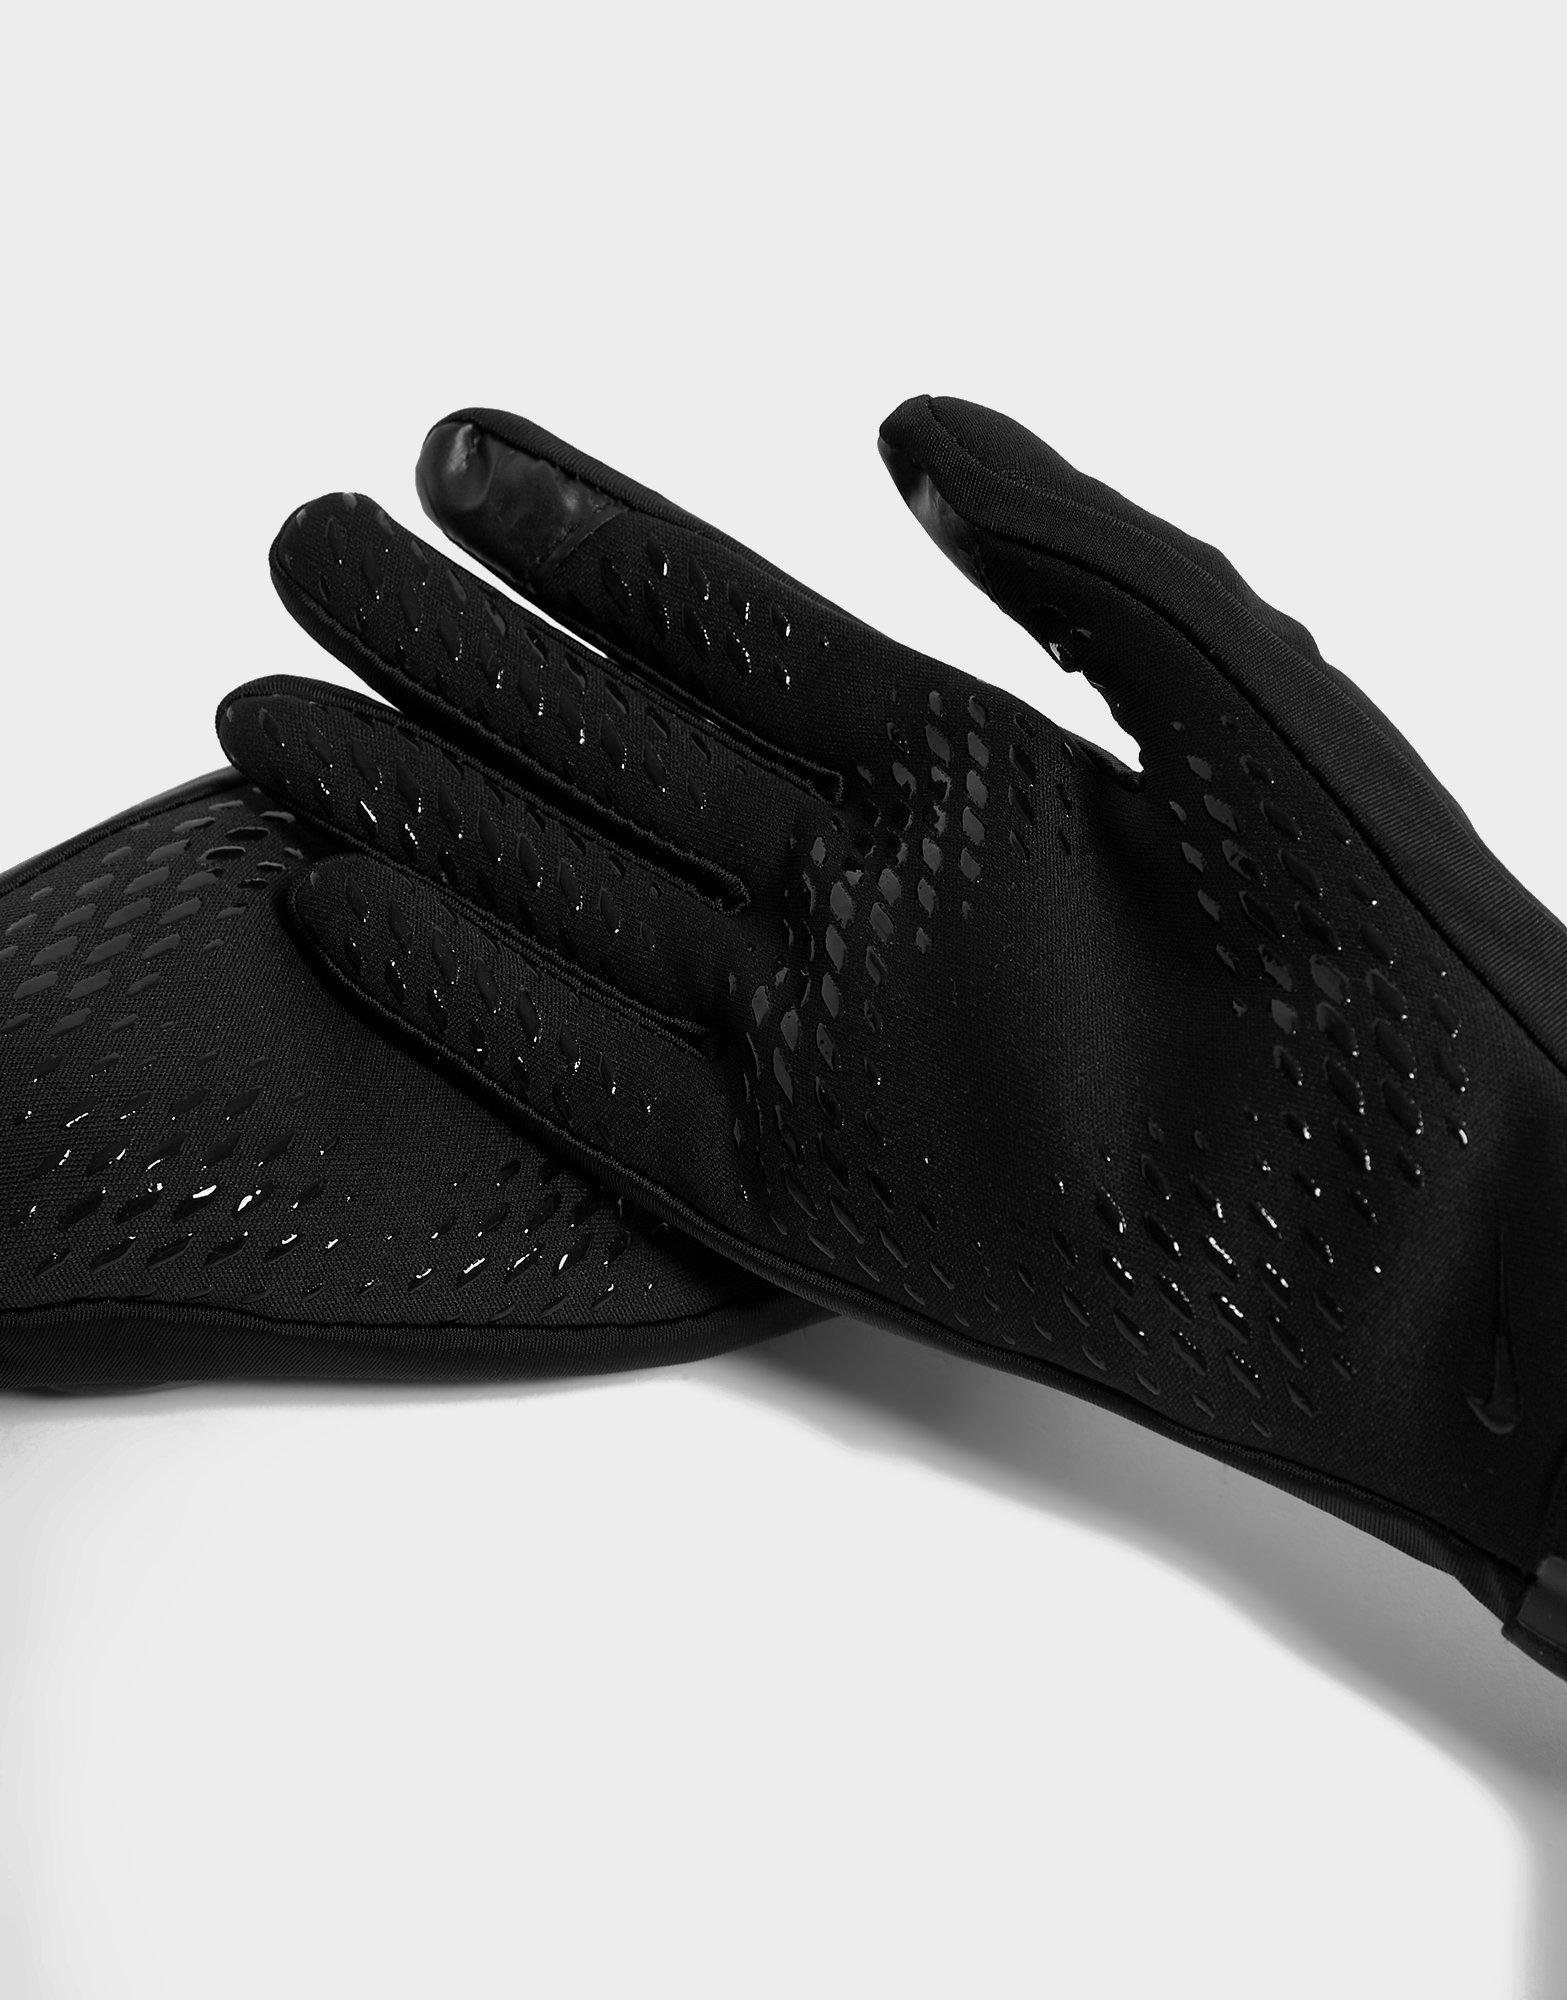 nike academy hyperwarm gloves